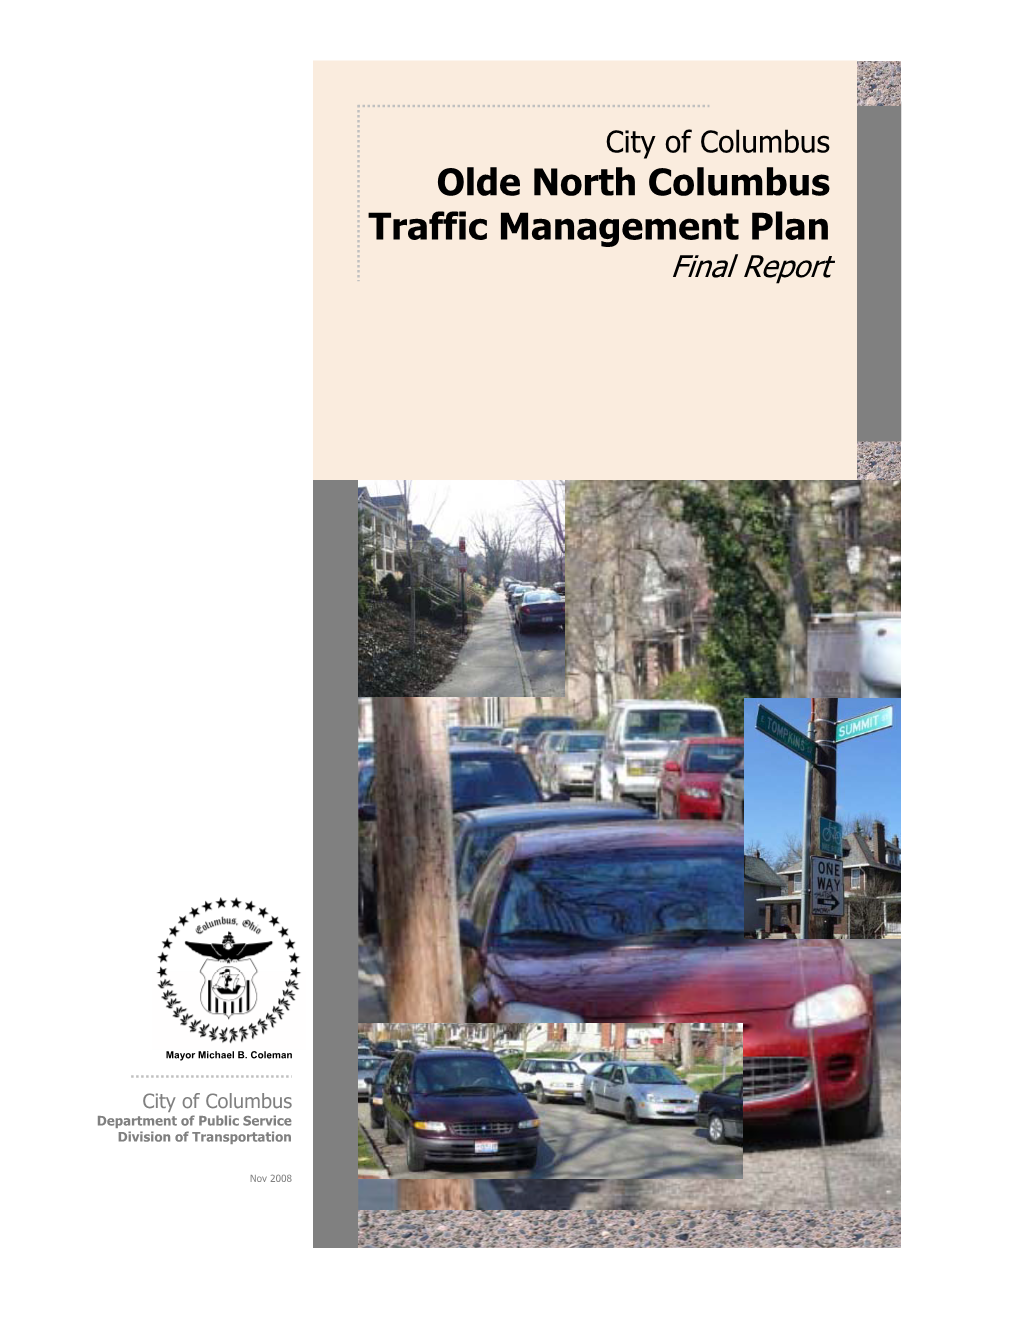 Olde North Columbus Traffic Management Plan Final Report